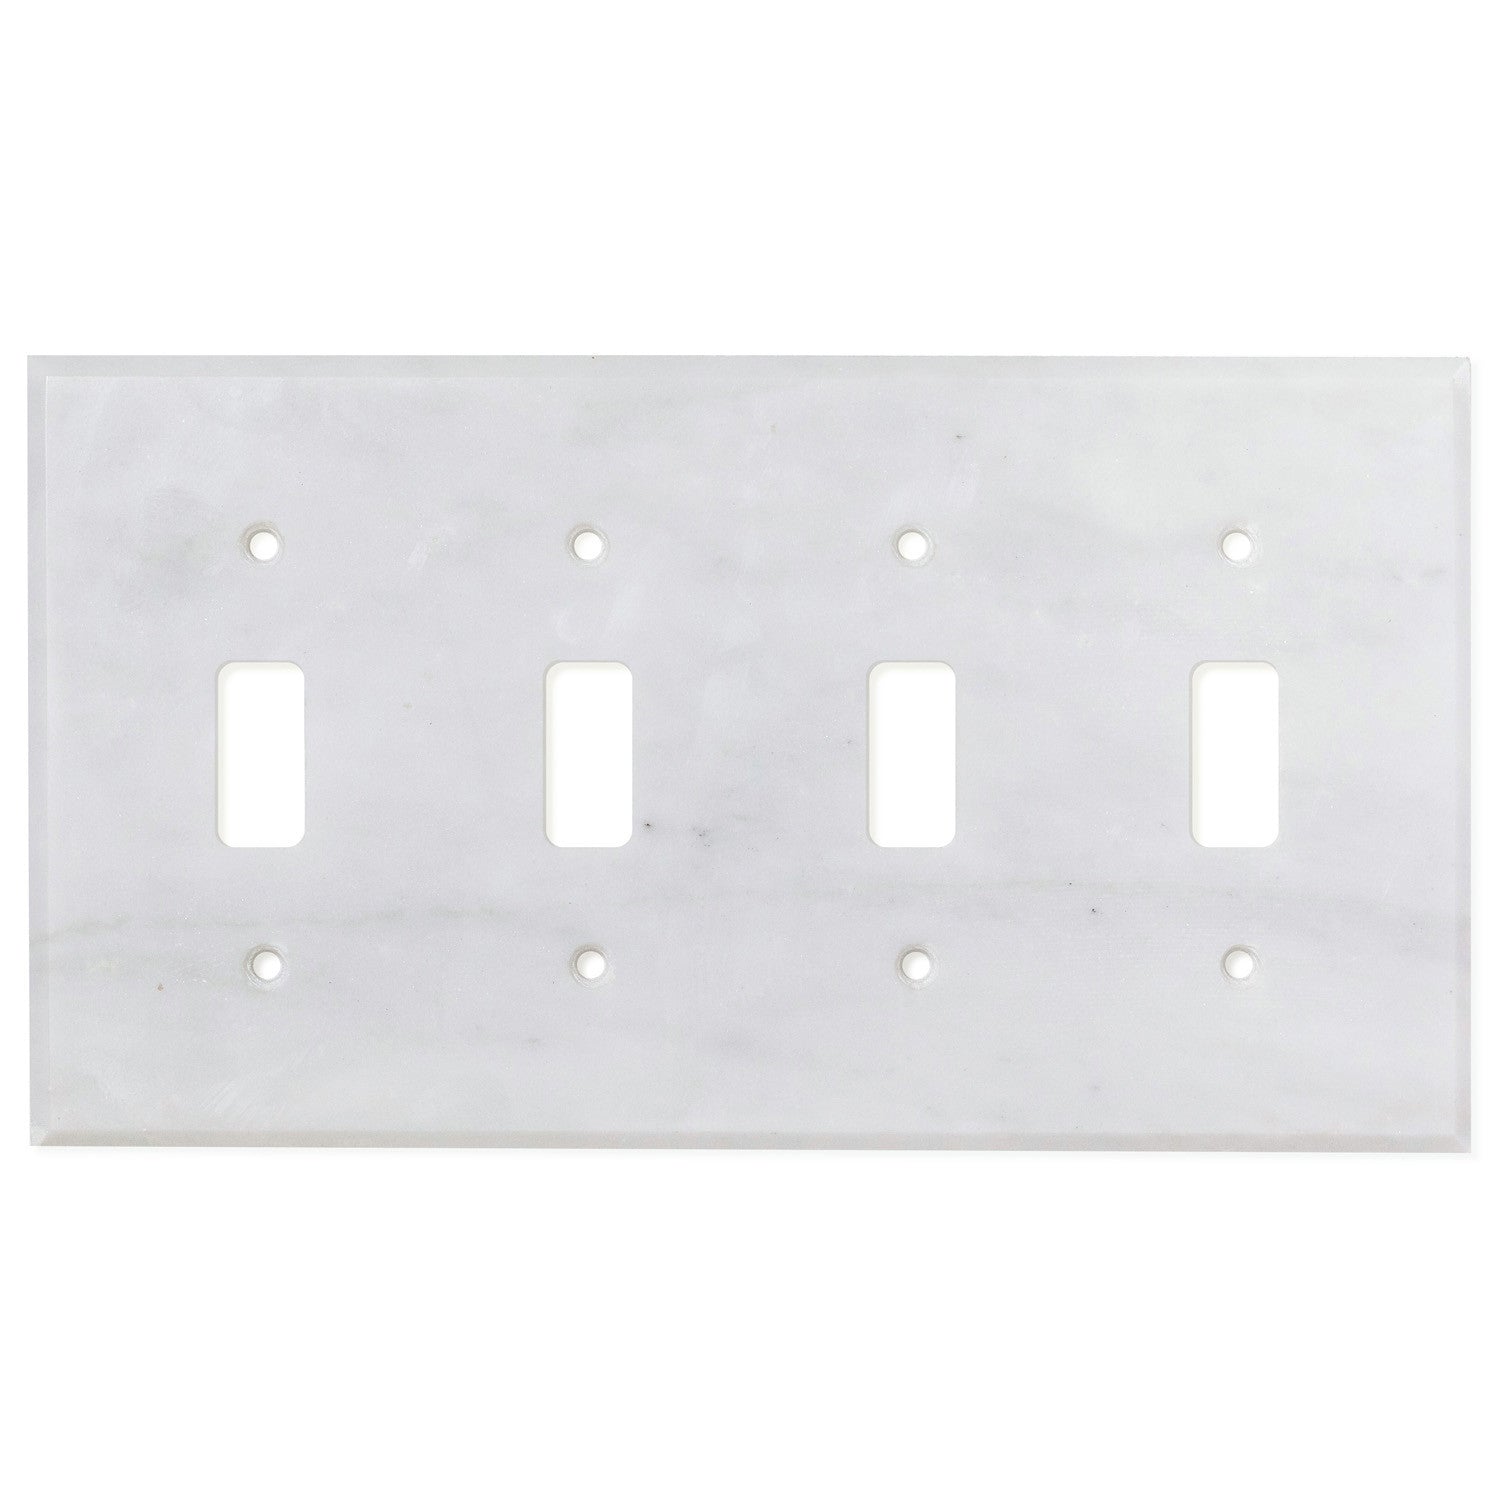 Bianco Carrara (Carrara White) Marble Switch Plate Cover, Honed (4 TOGGLE) - Tilephile